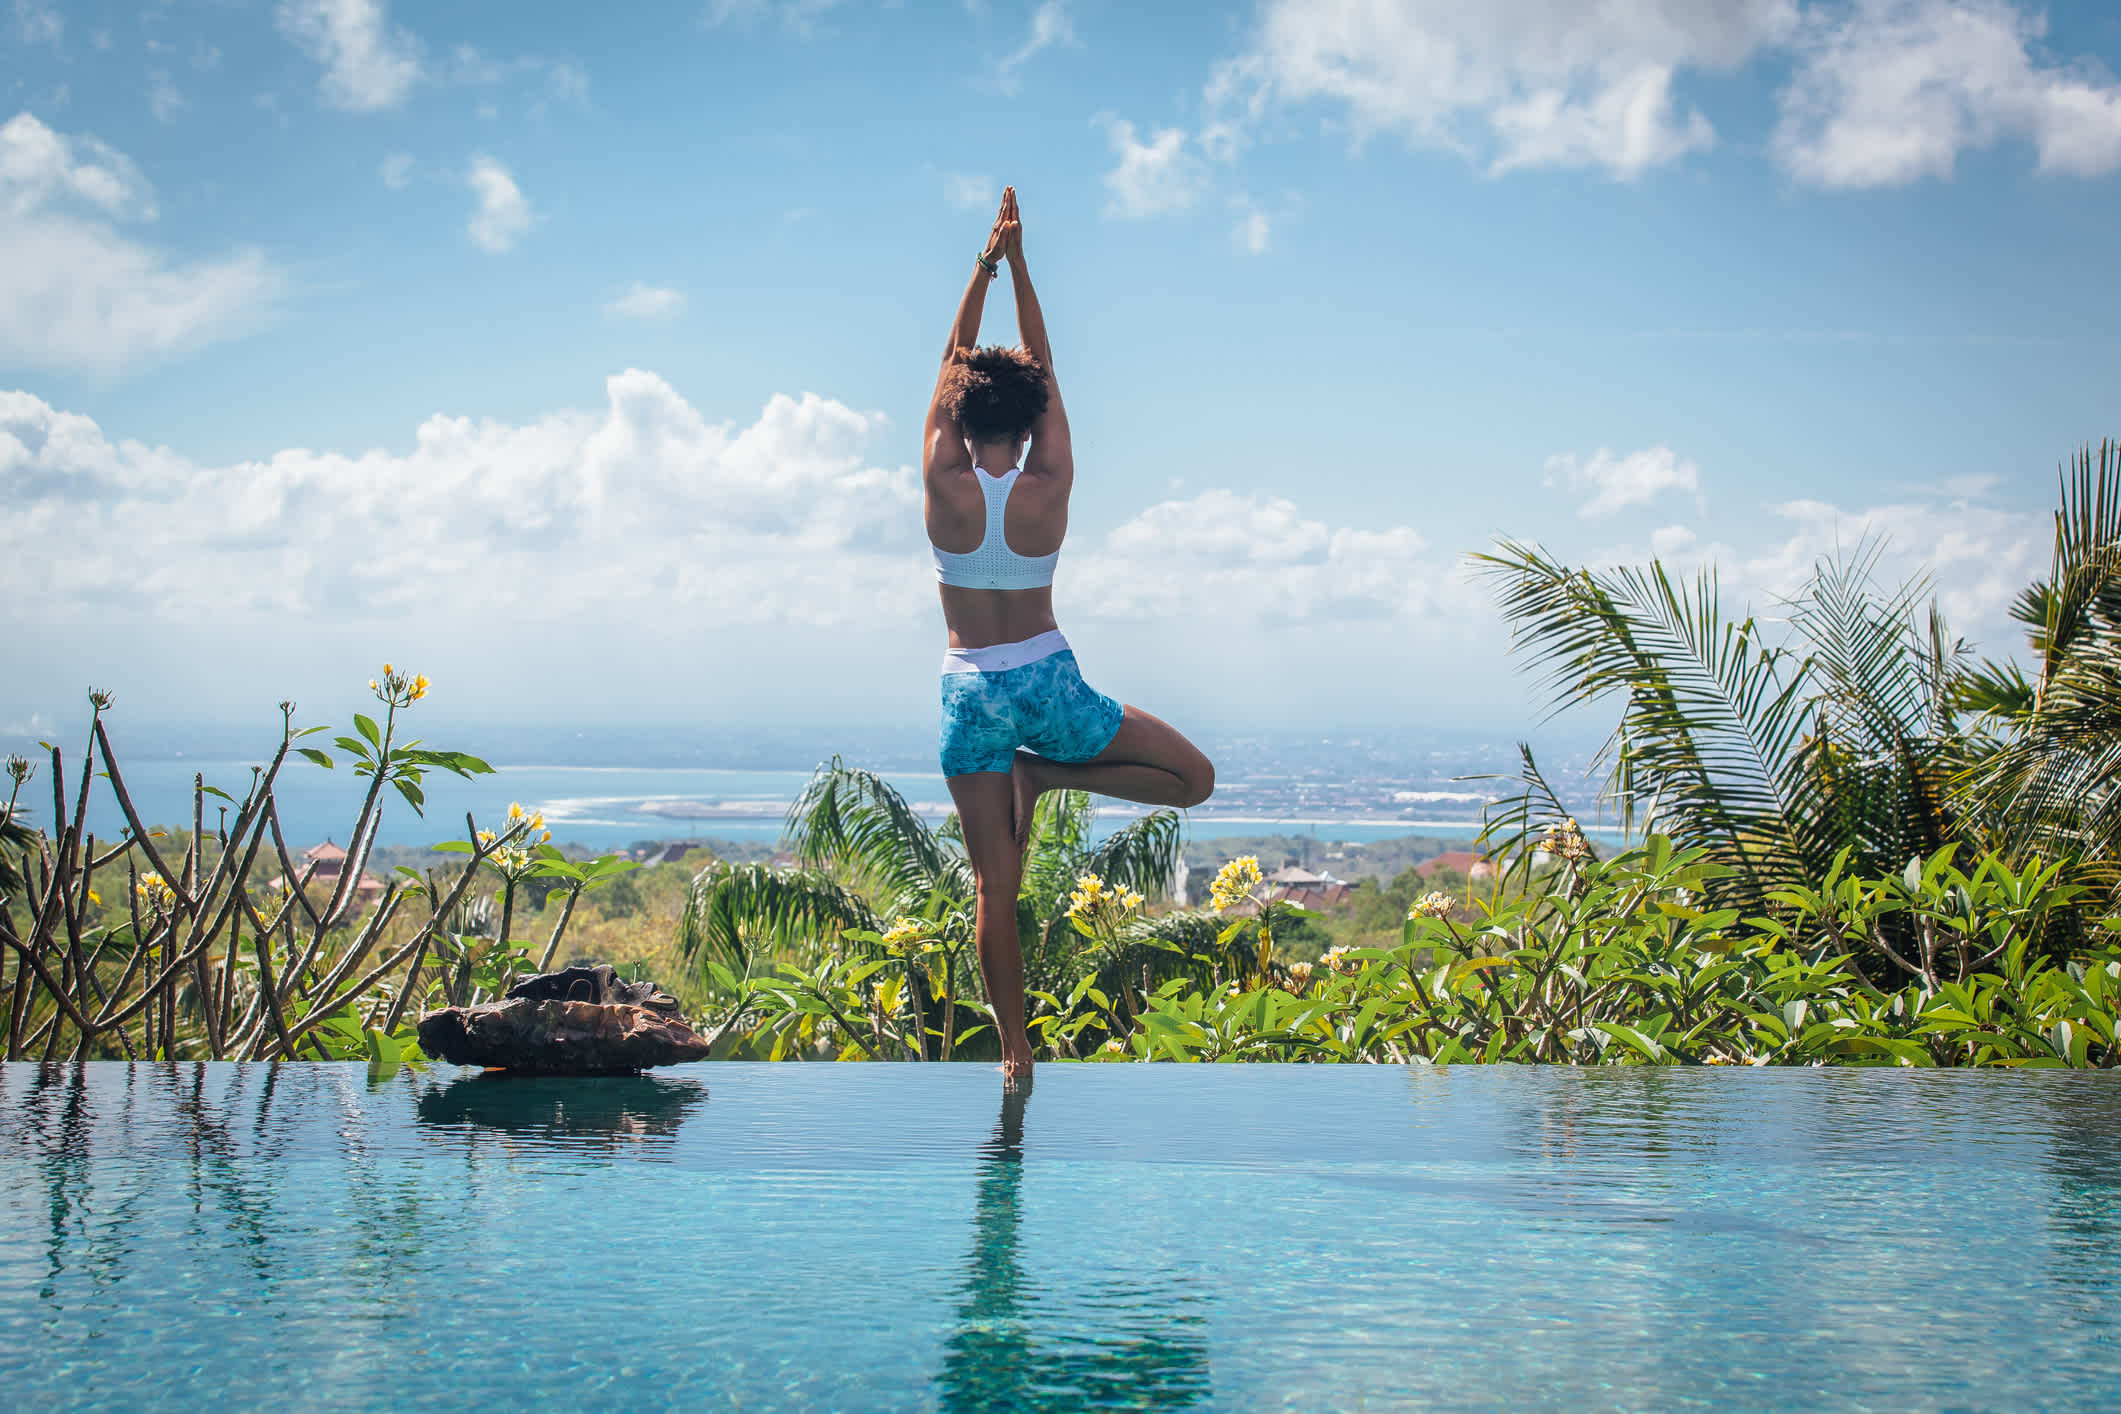 Eine Frau praktiziert Yoga am Rande des Infinity-Pools in Bali, Indonesien.

